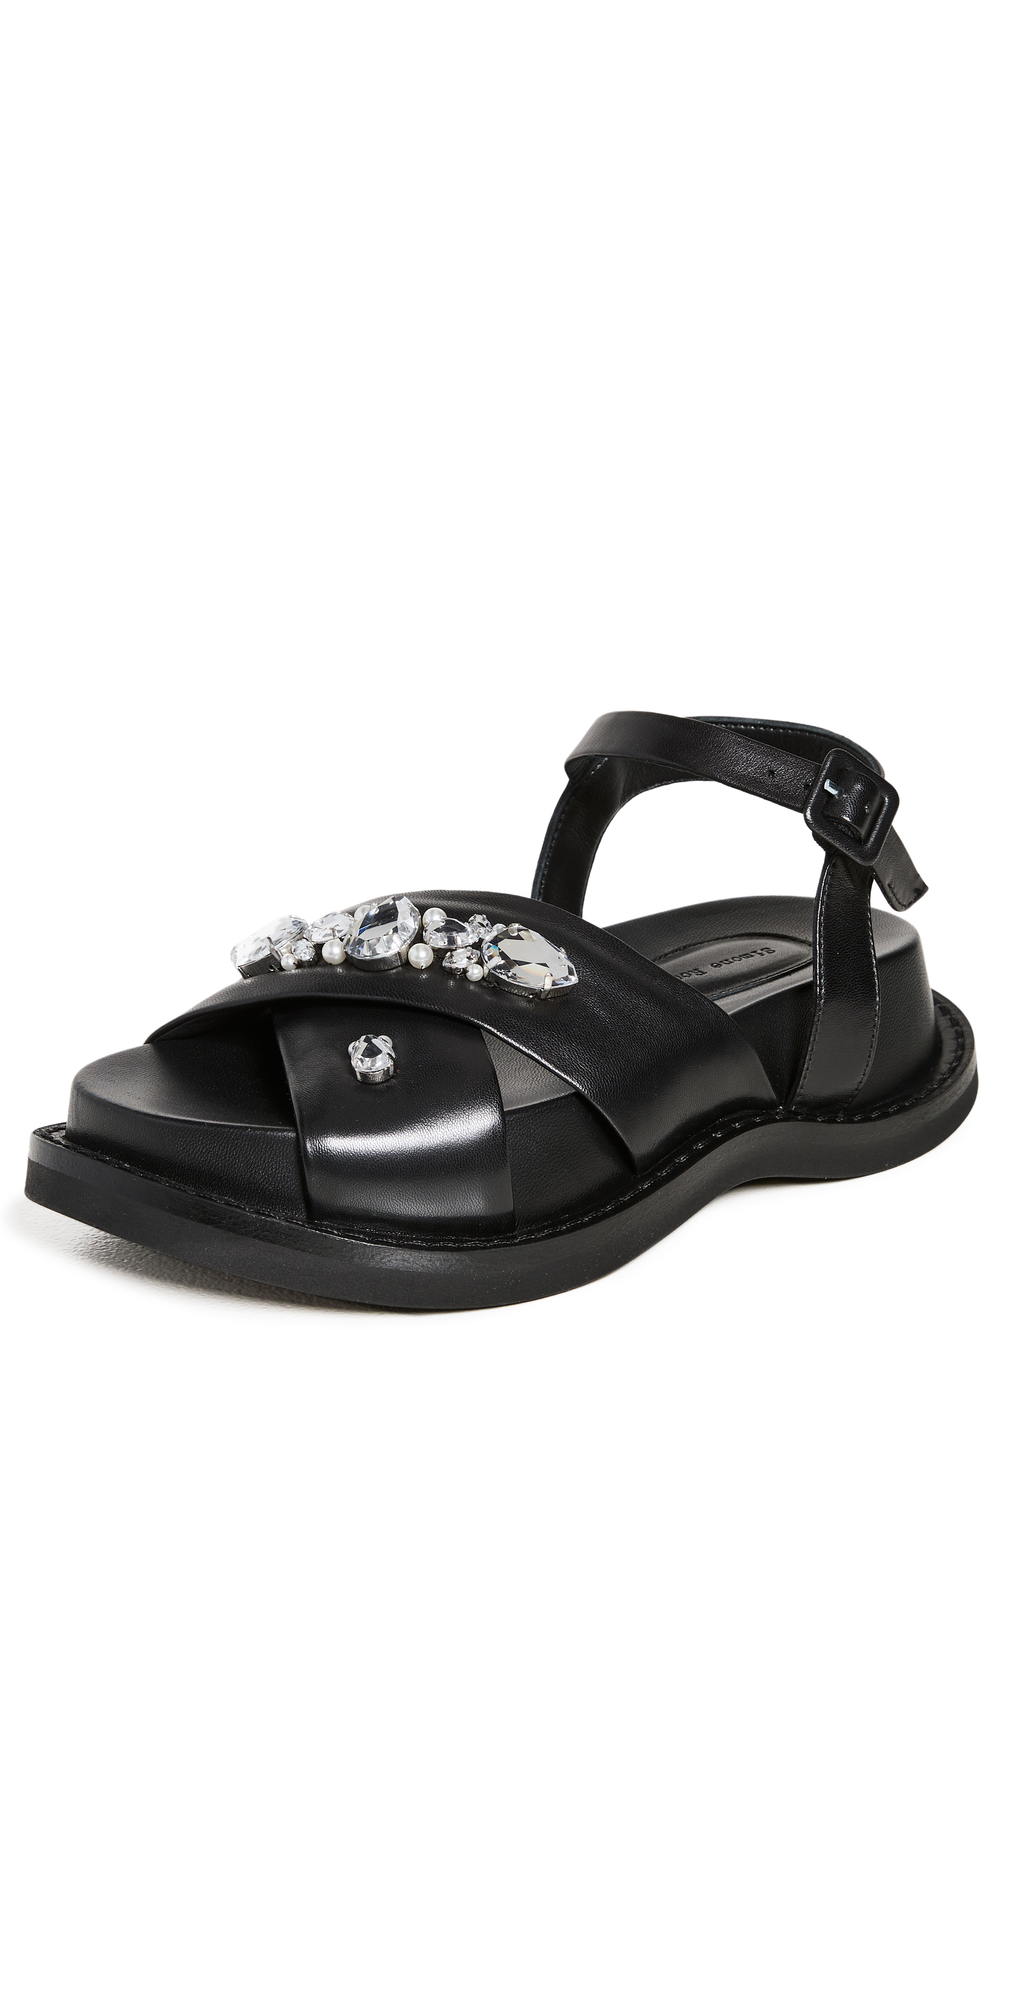 Simone Rocha Crisscross Crystal Curve Sandals in black / clear